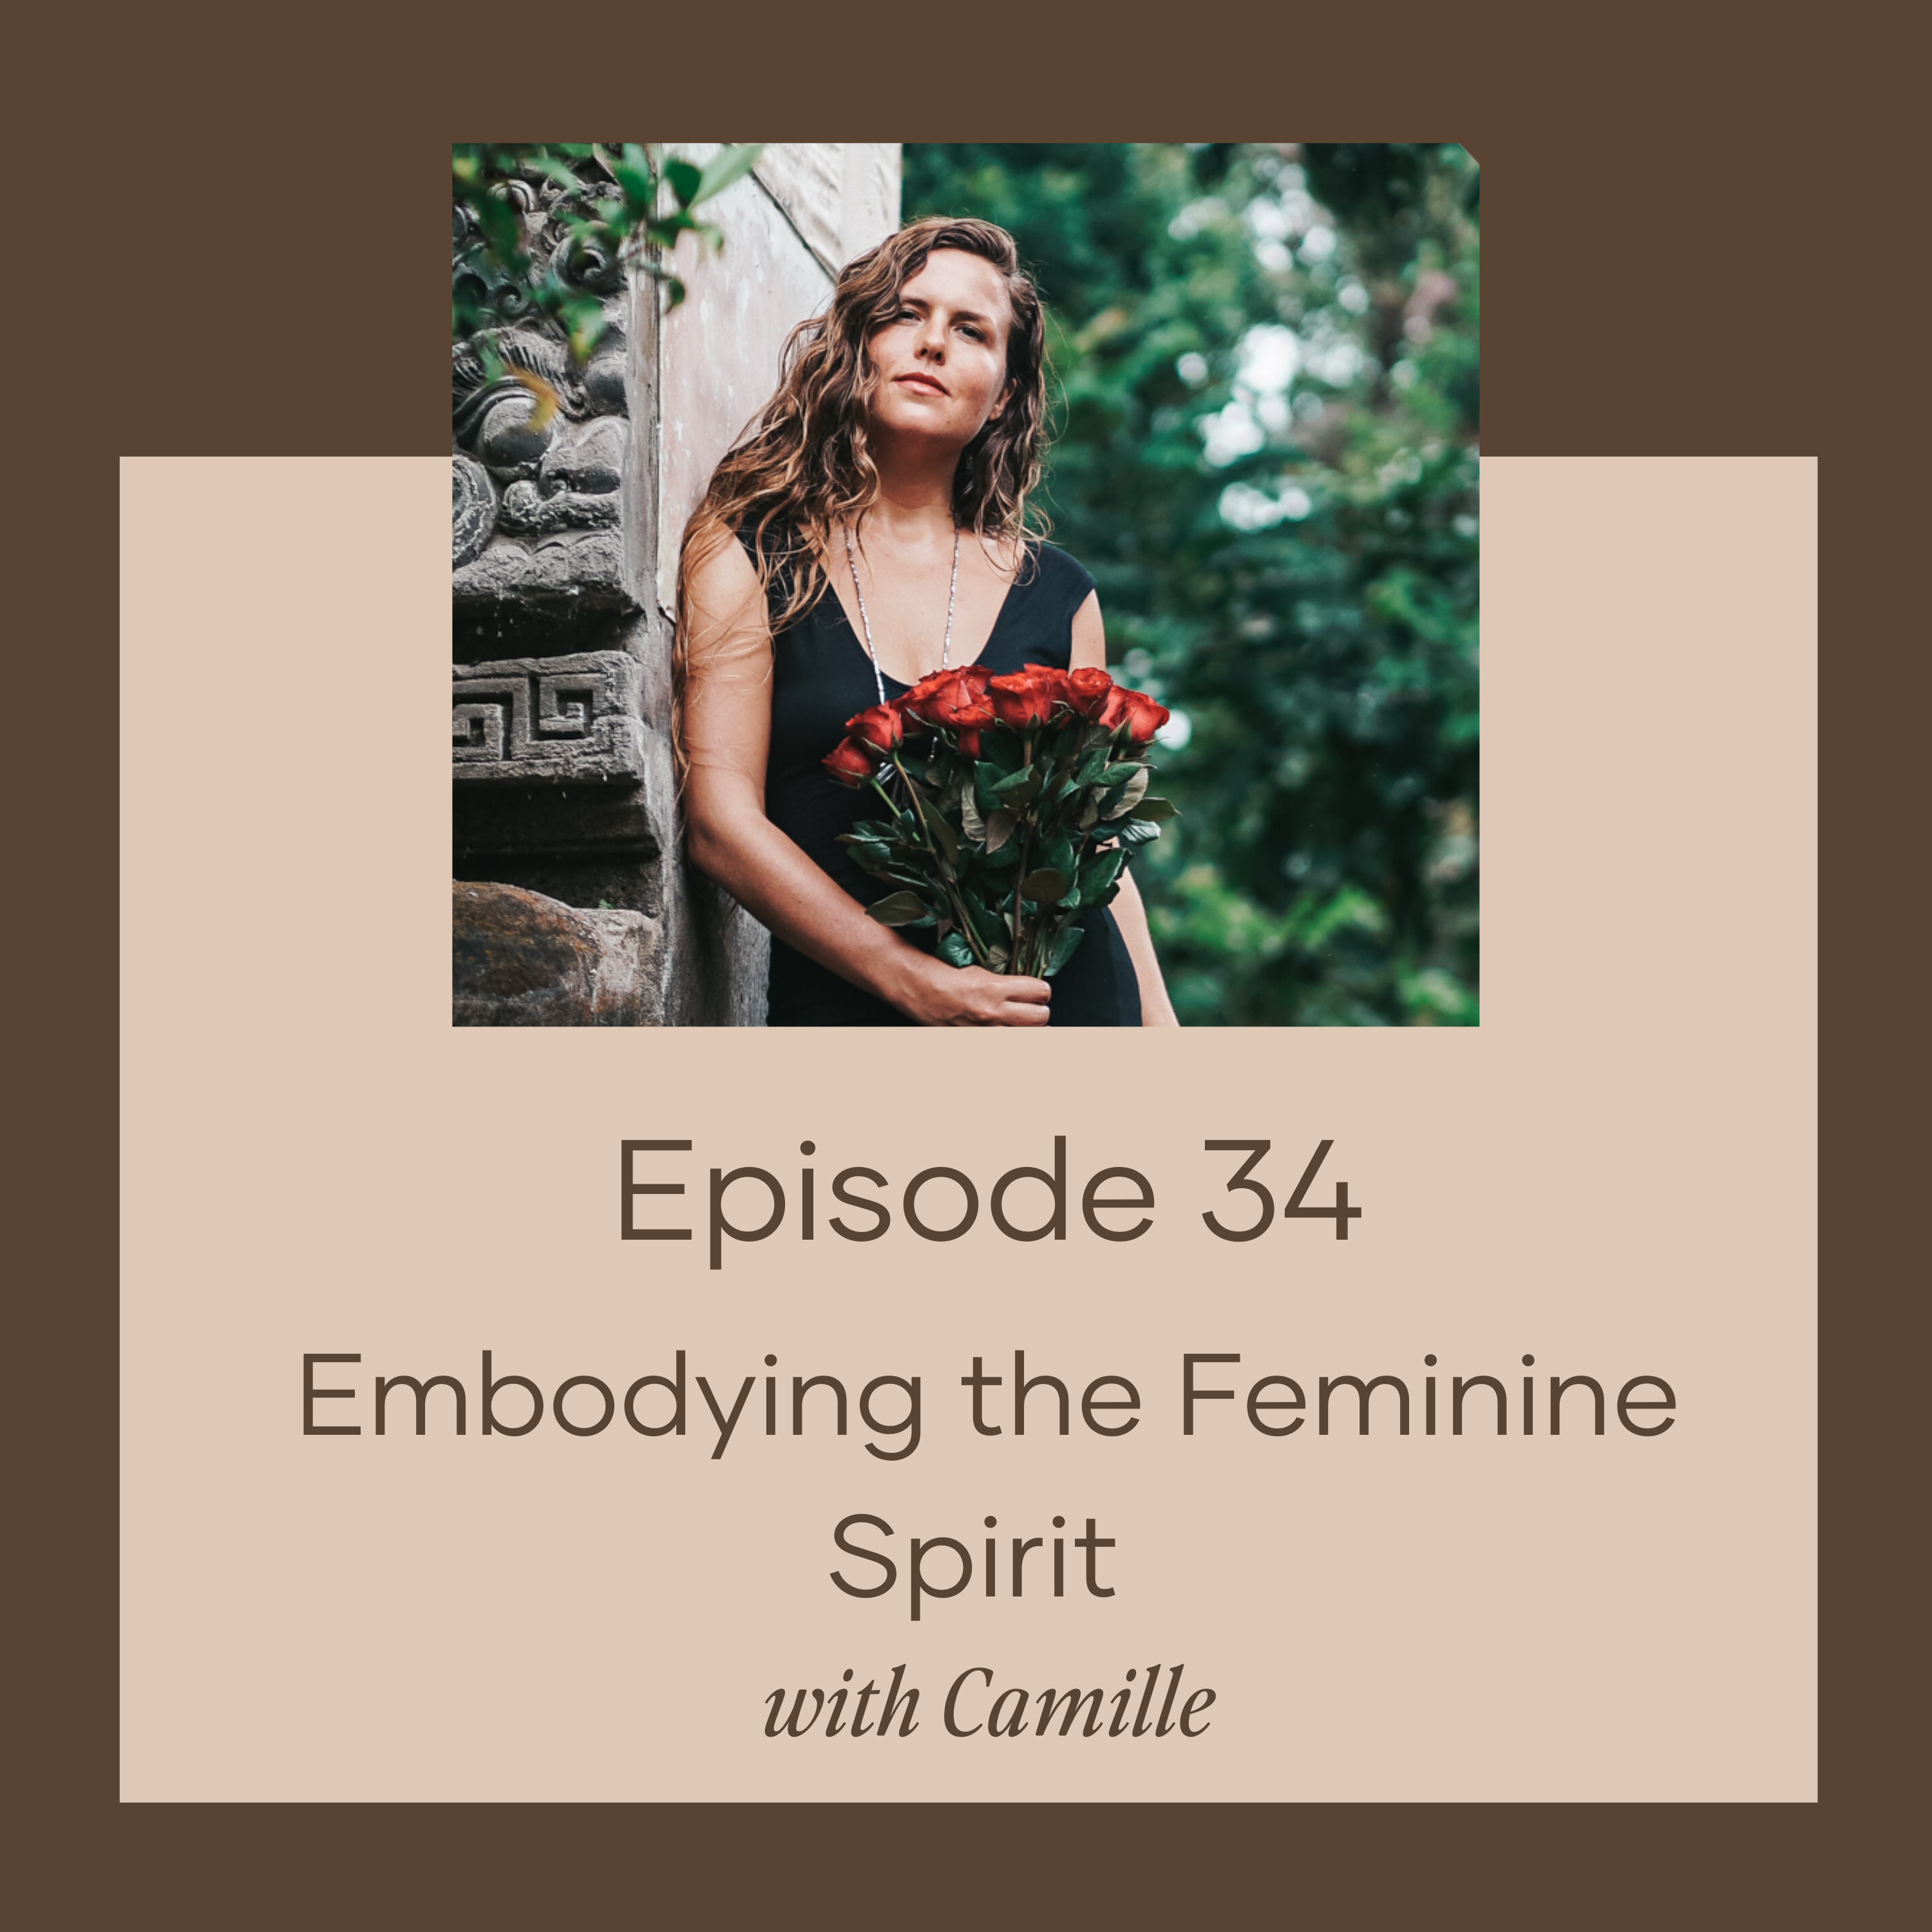 Embodying the Feminine Spirit with Camille